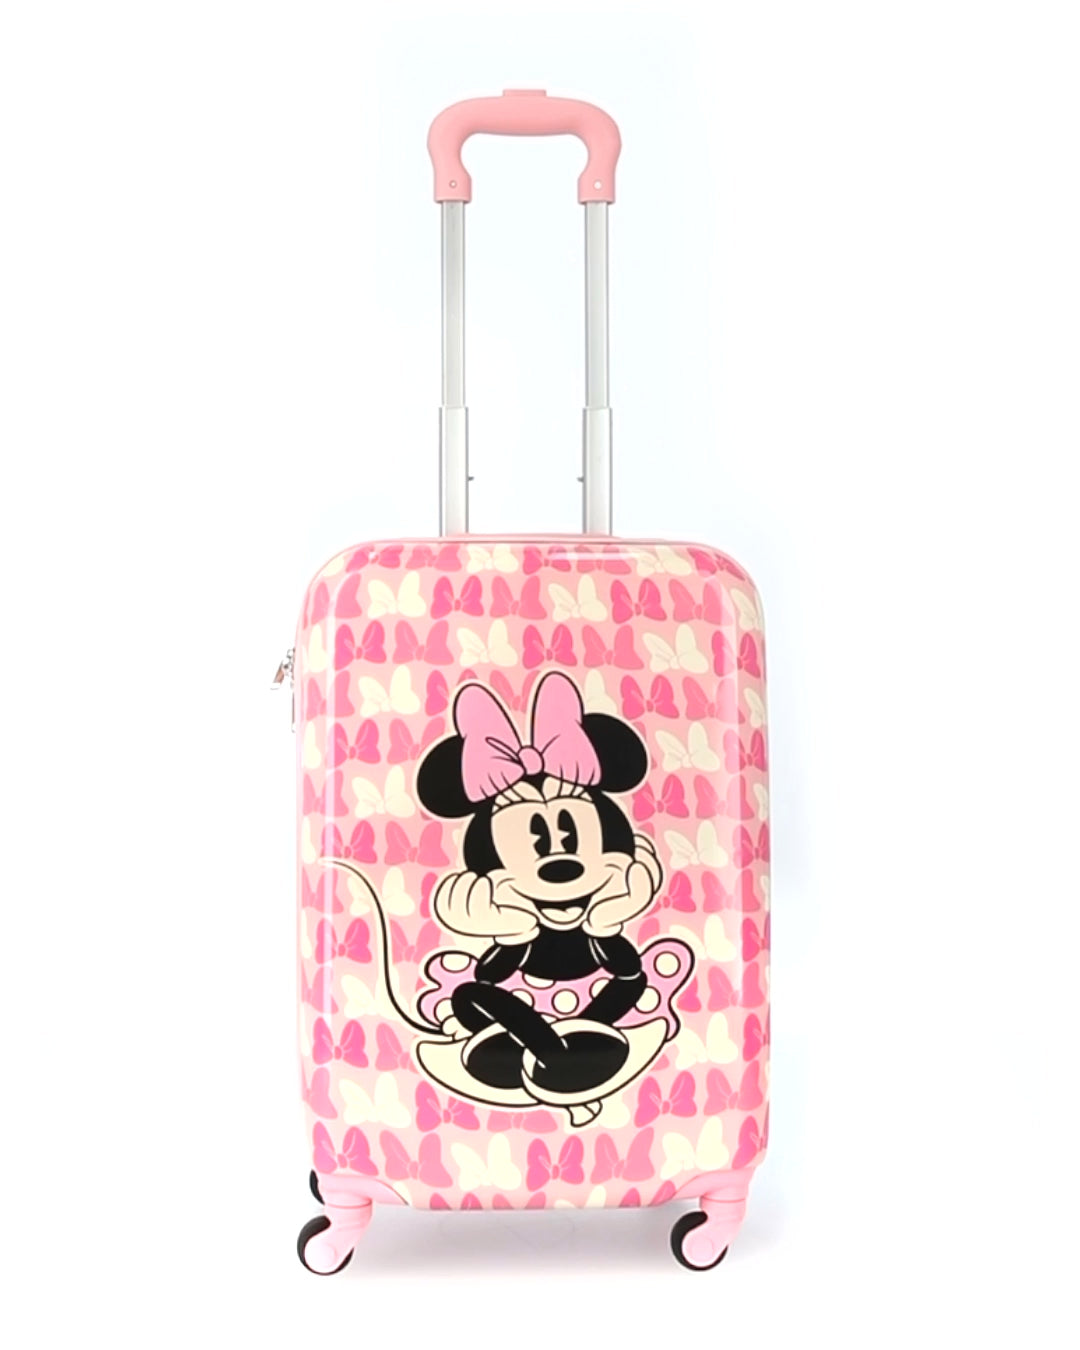 Buy Pop It Mickey Mouse Shape Zipper Bag Online In Pakistan At Toyzone.pk